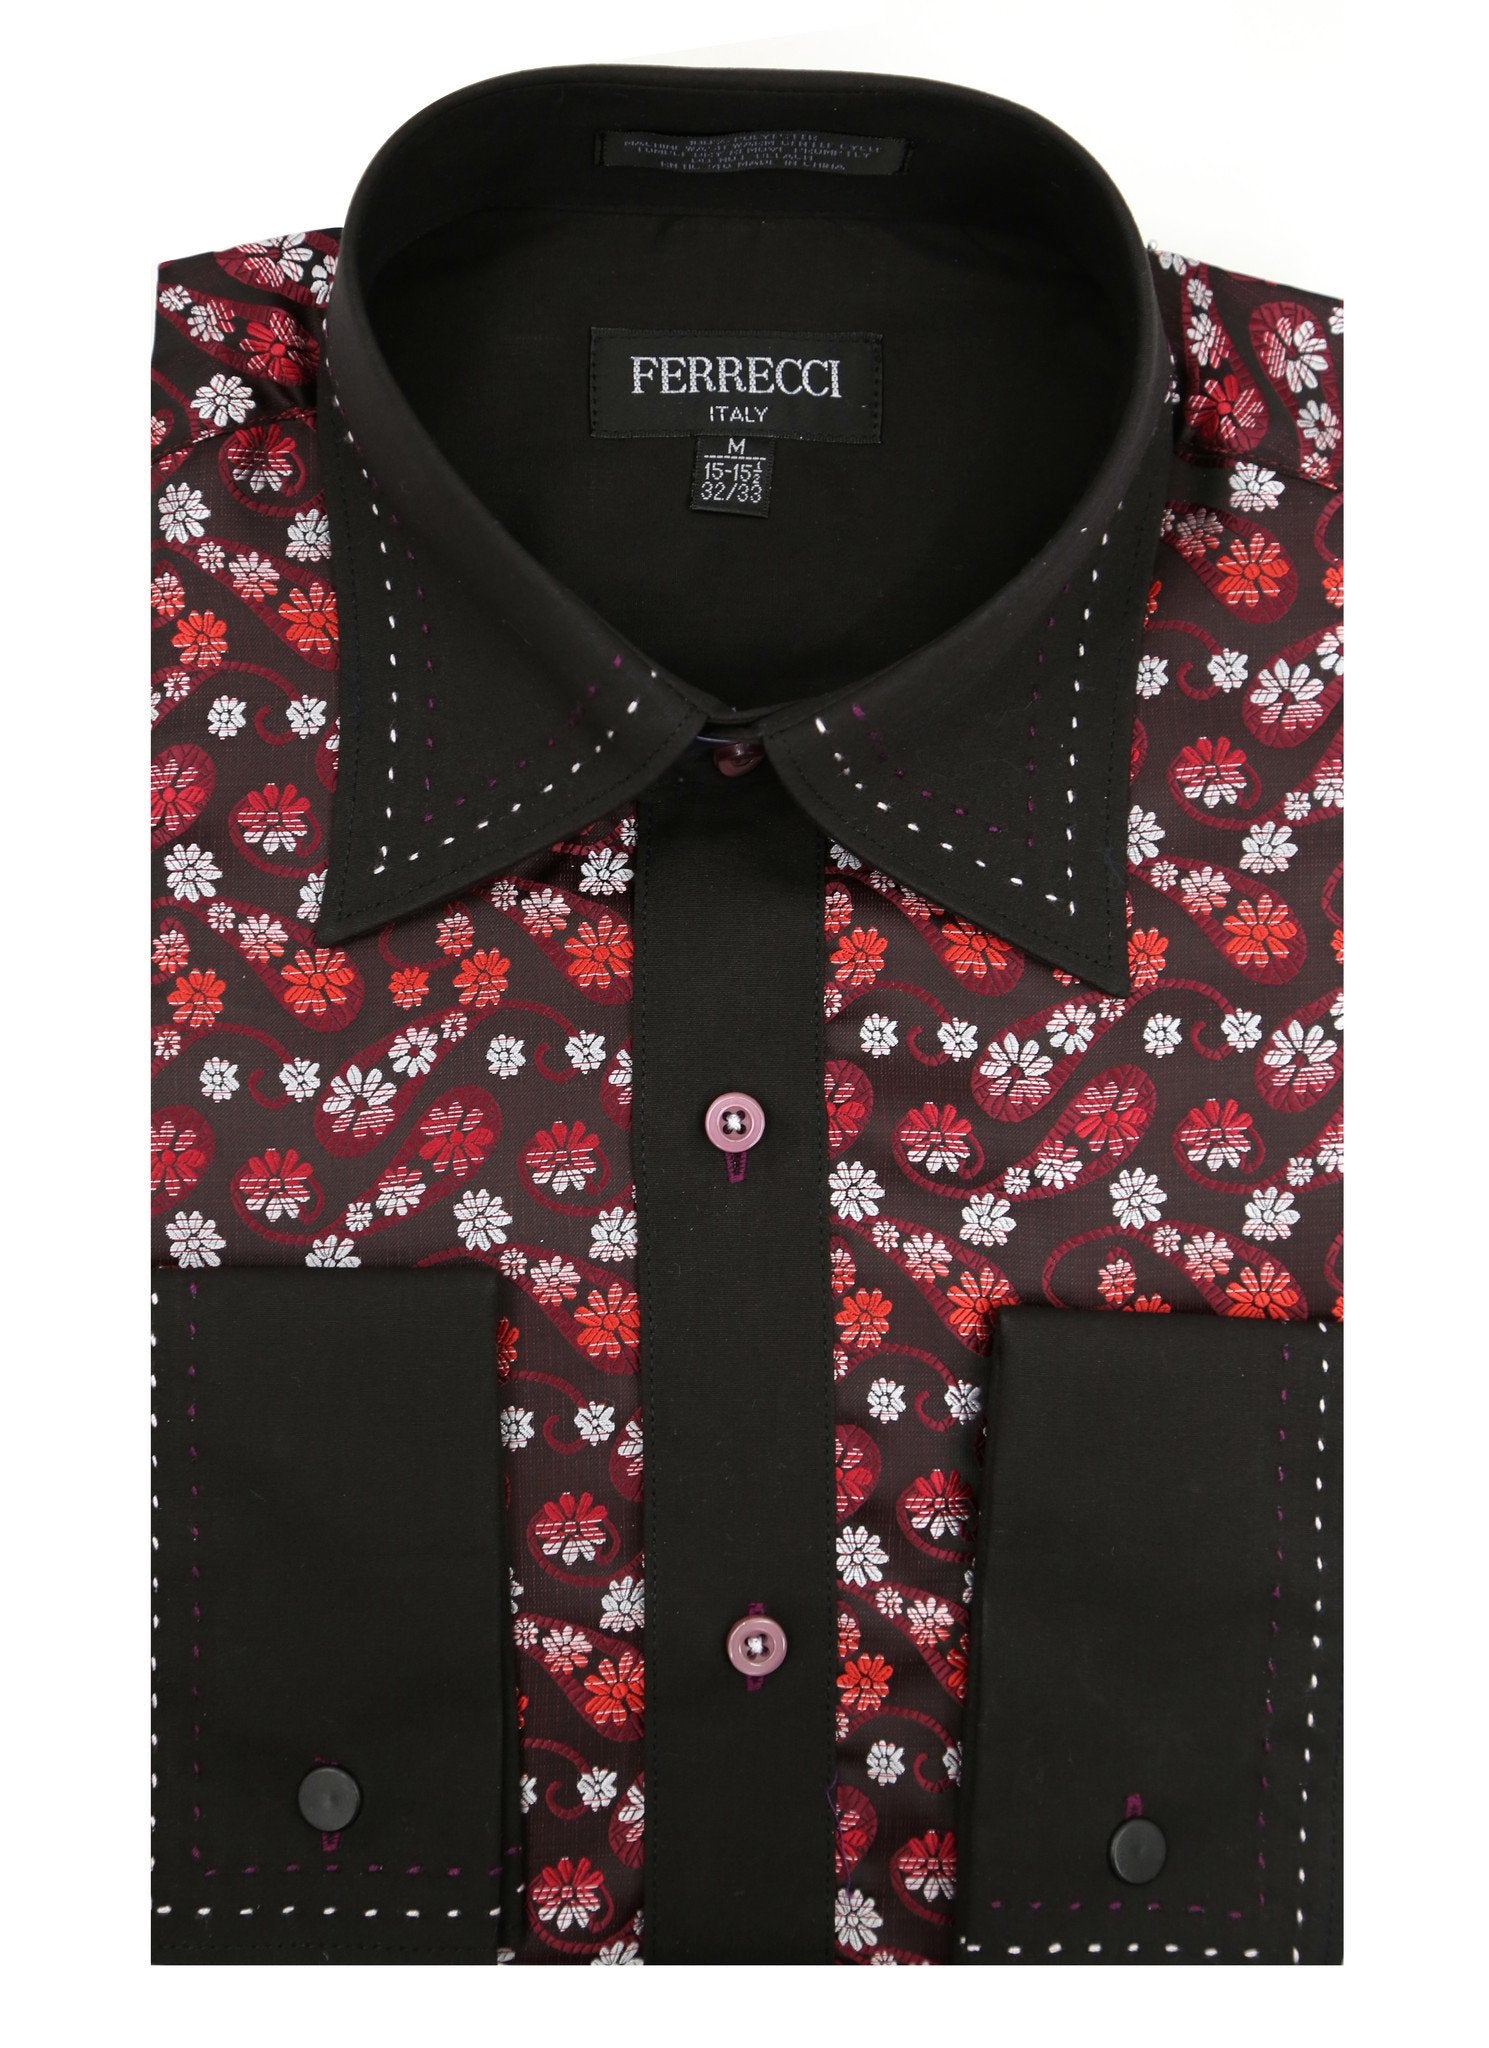 Ferrecci Men's Satine Hi-1001 Red & Black Flower Button Down Dress Shirt - FHYINC